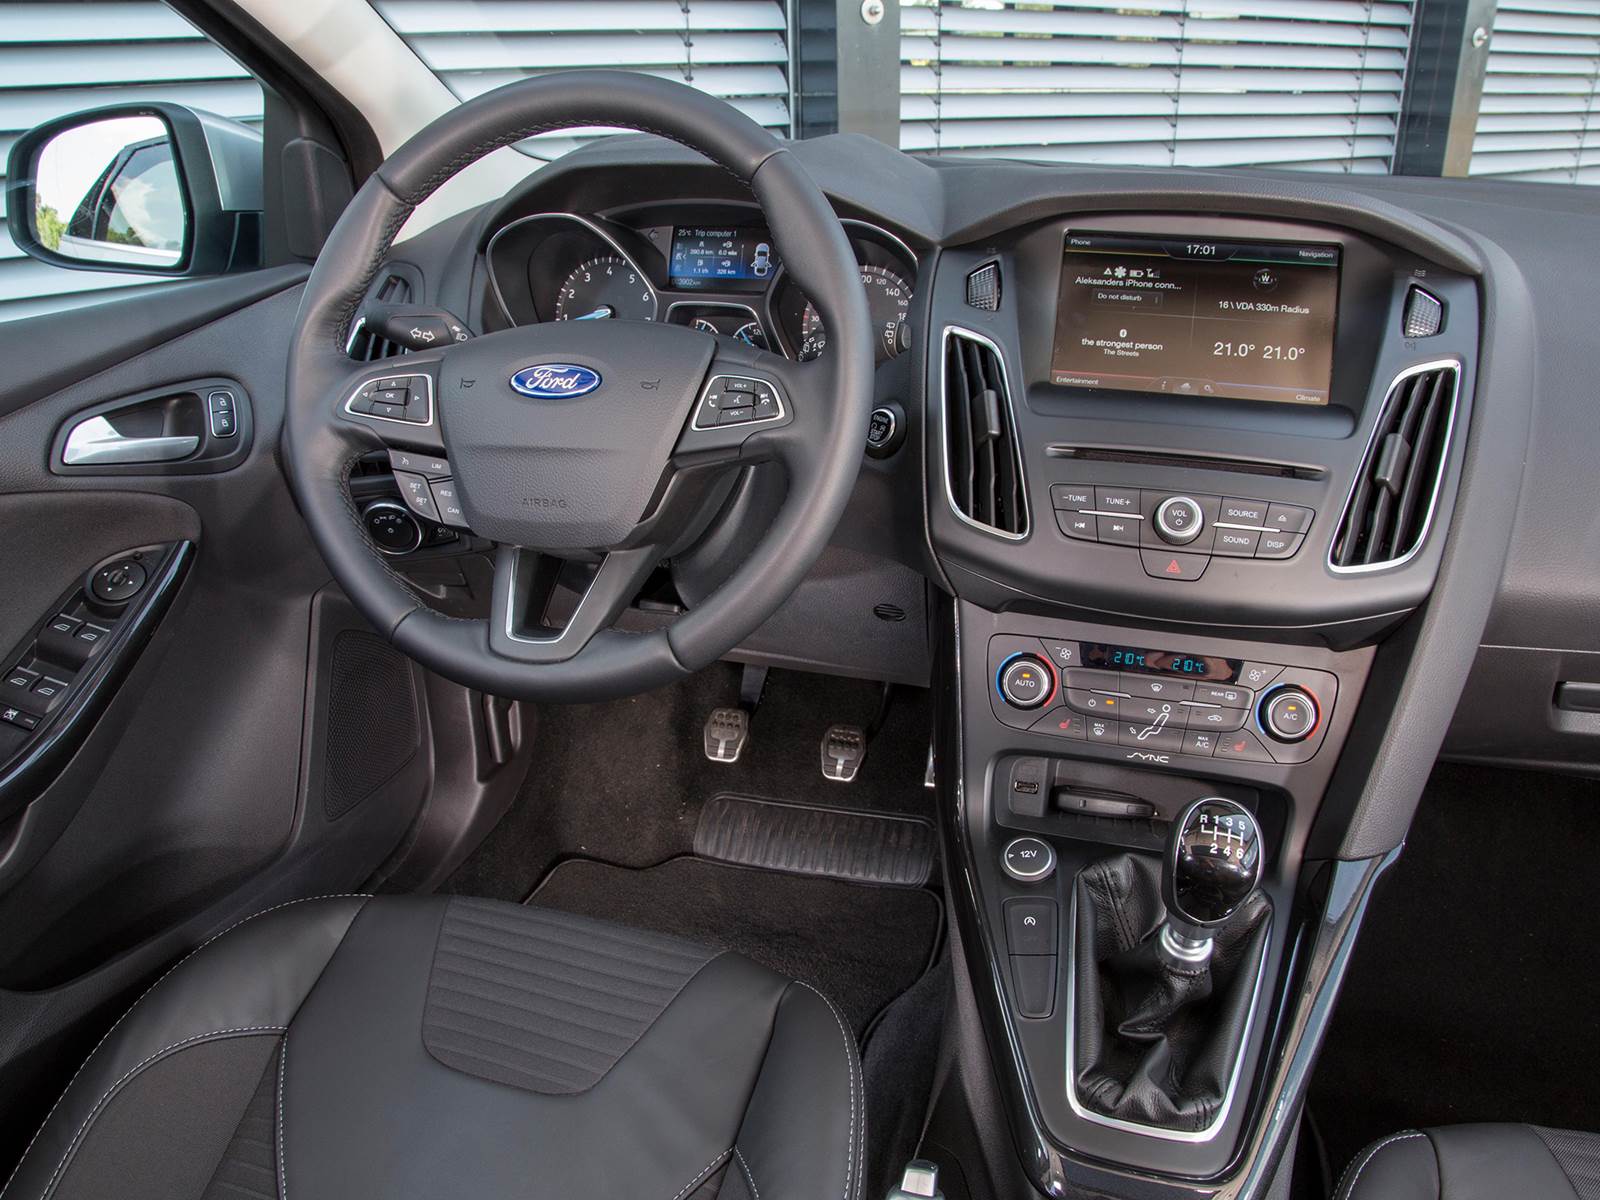 Novo Ford Focus 2015 - painel